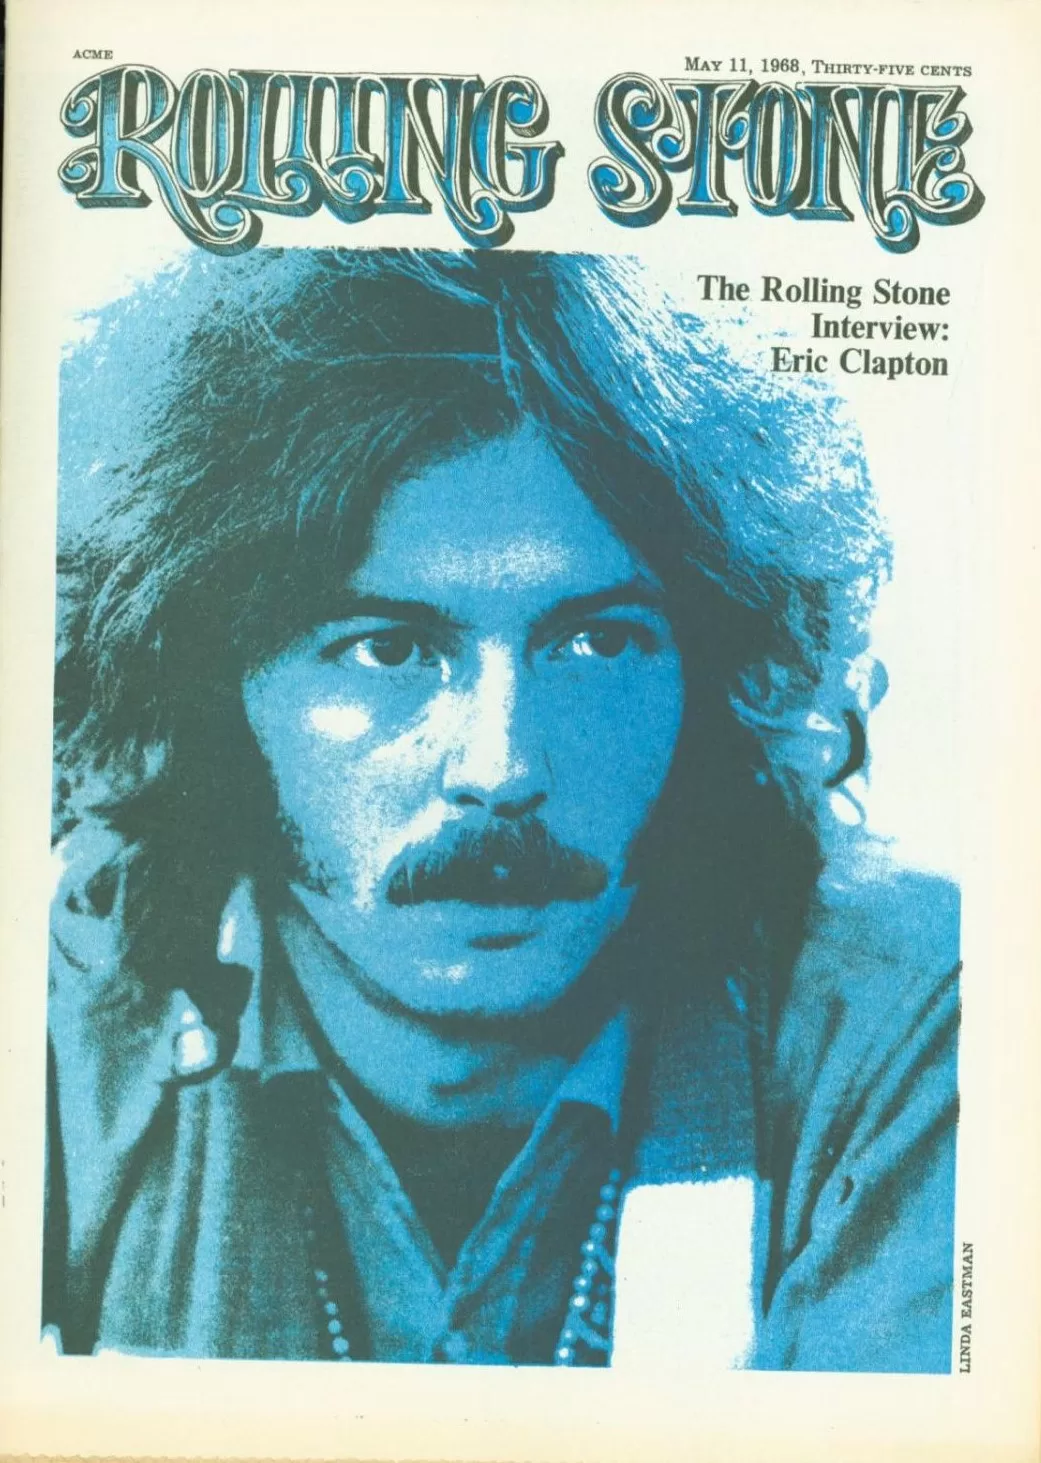 Eric Clapton 1968 Rolling Stone Portada